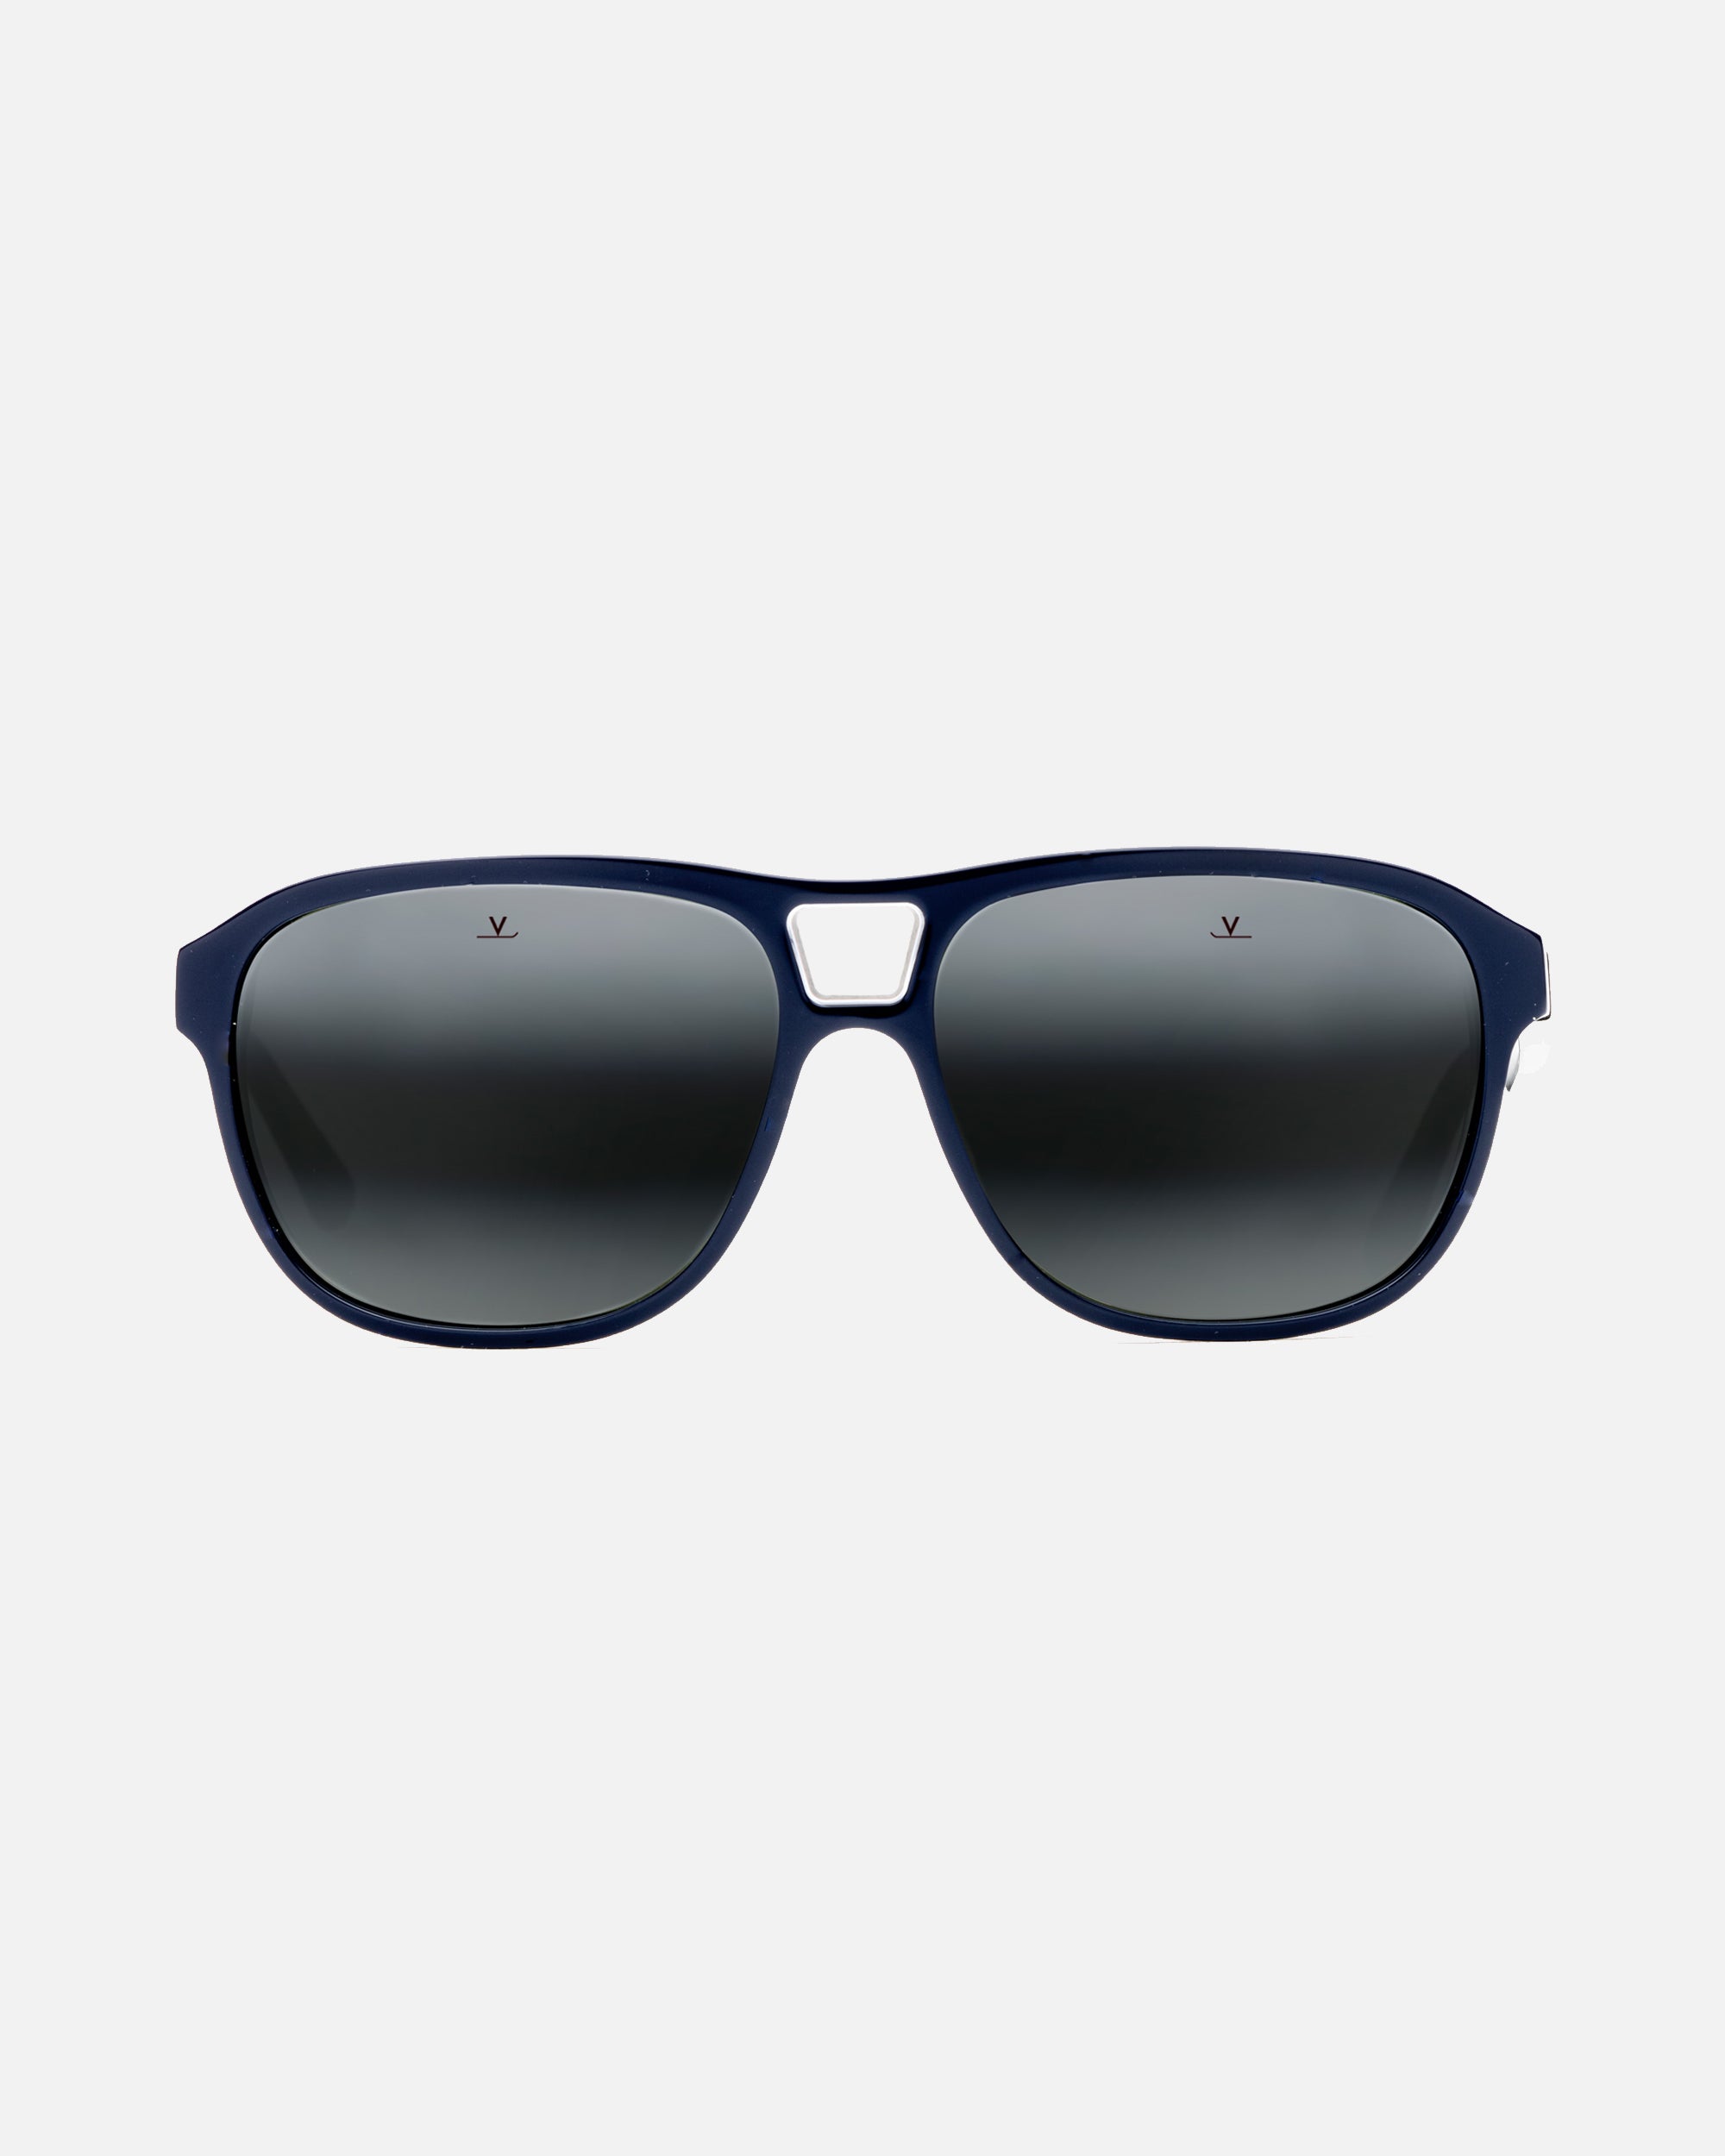 Vuarnet LEGEND 03 VALLEY Tortoise - Lifestyle Sunglasses